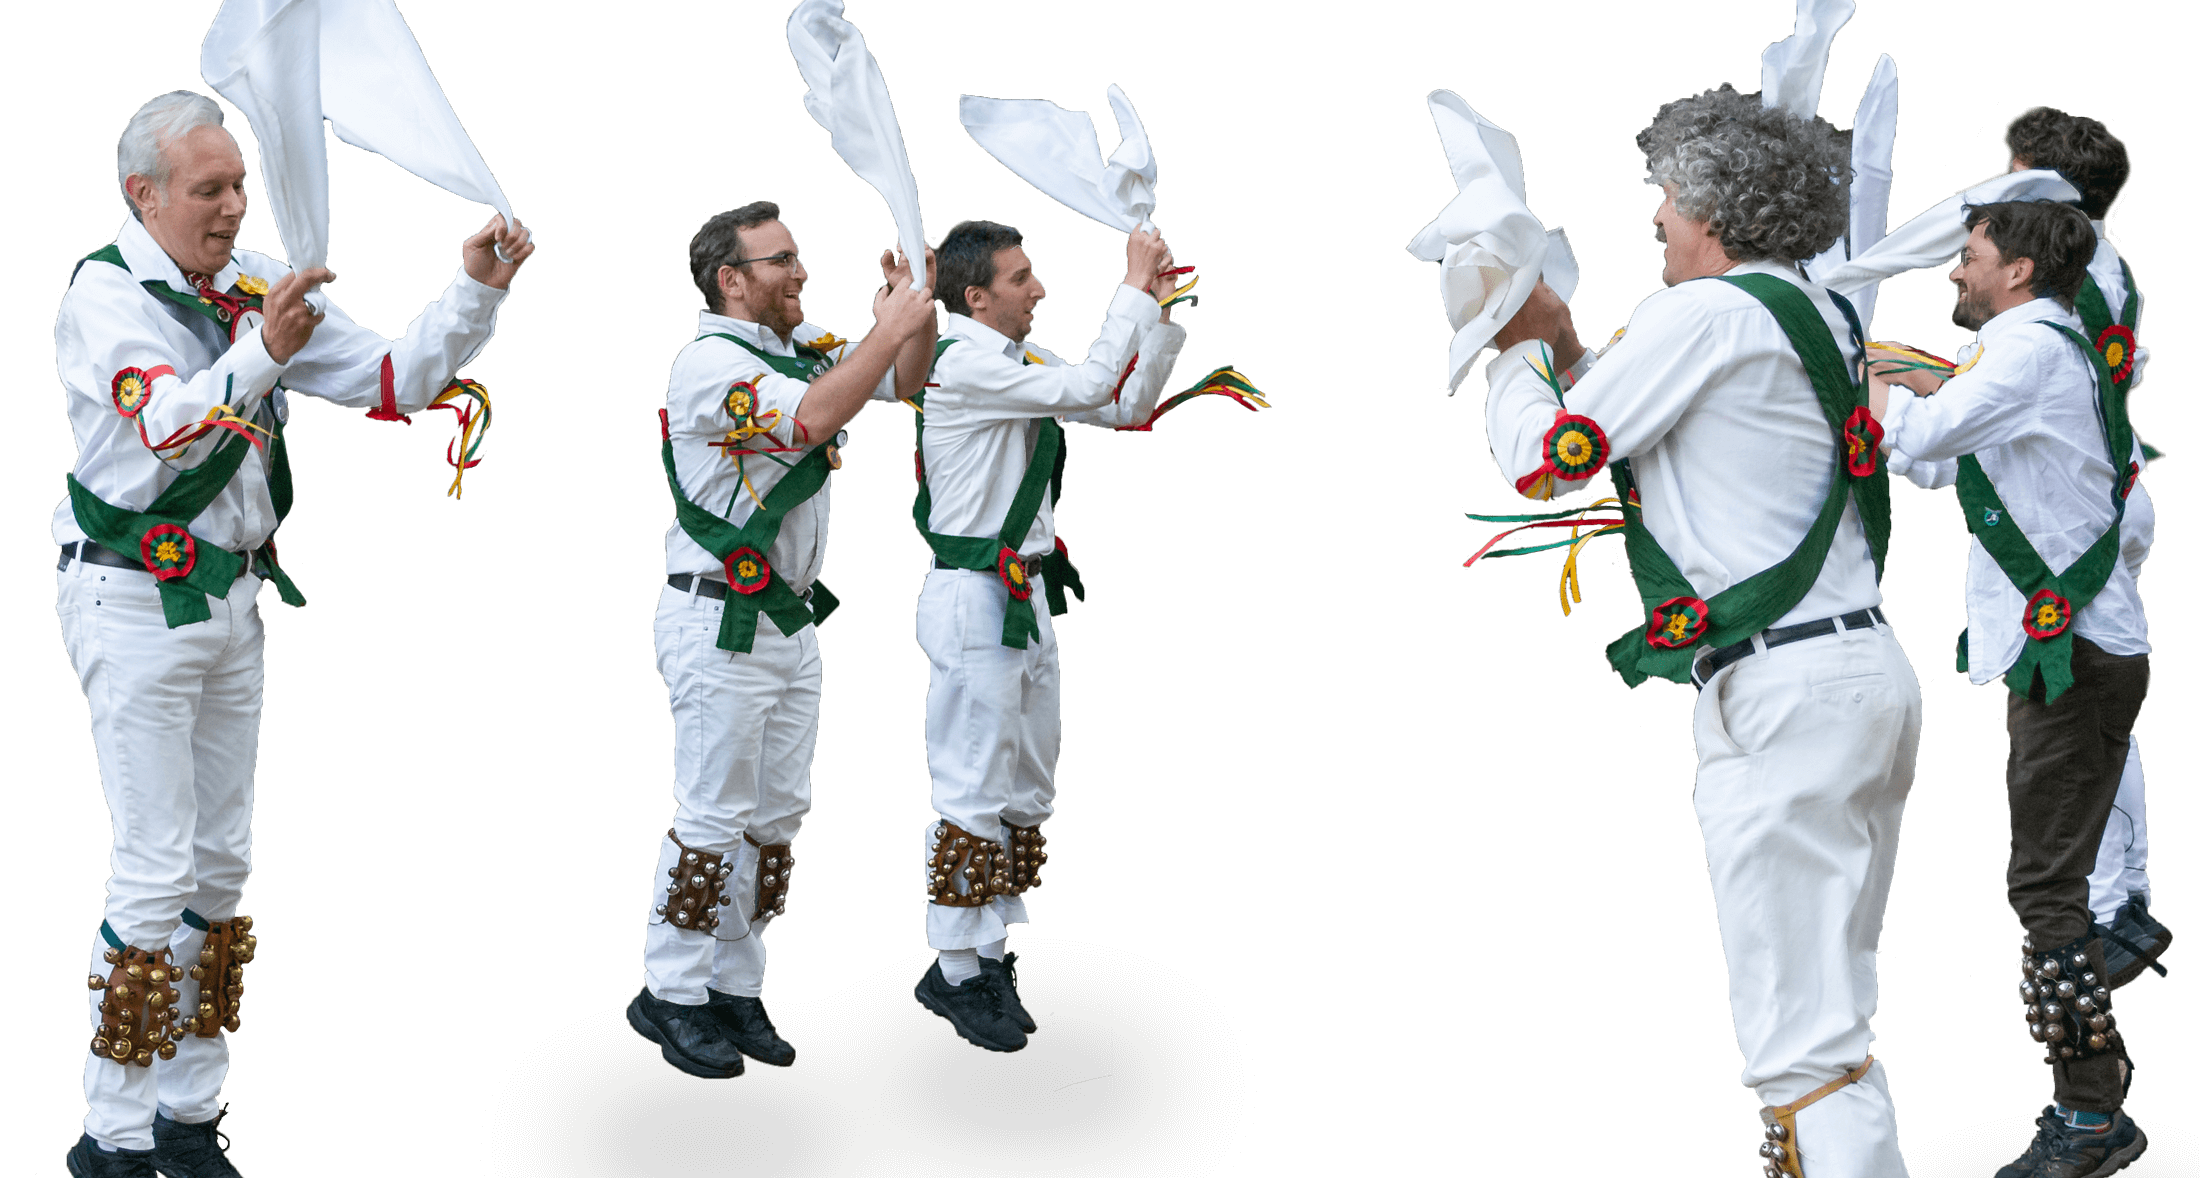 Morris dancers wave white handkerchiefs and jump in the air